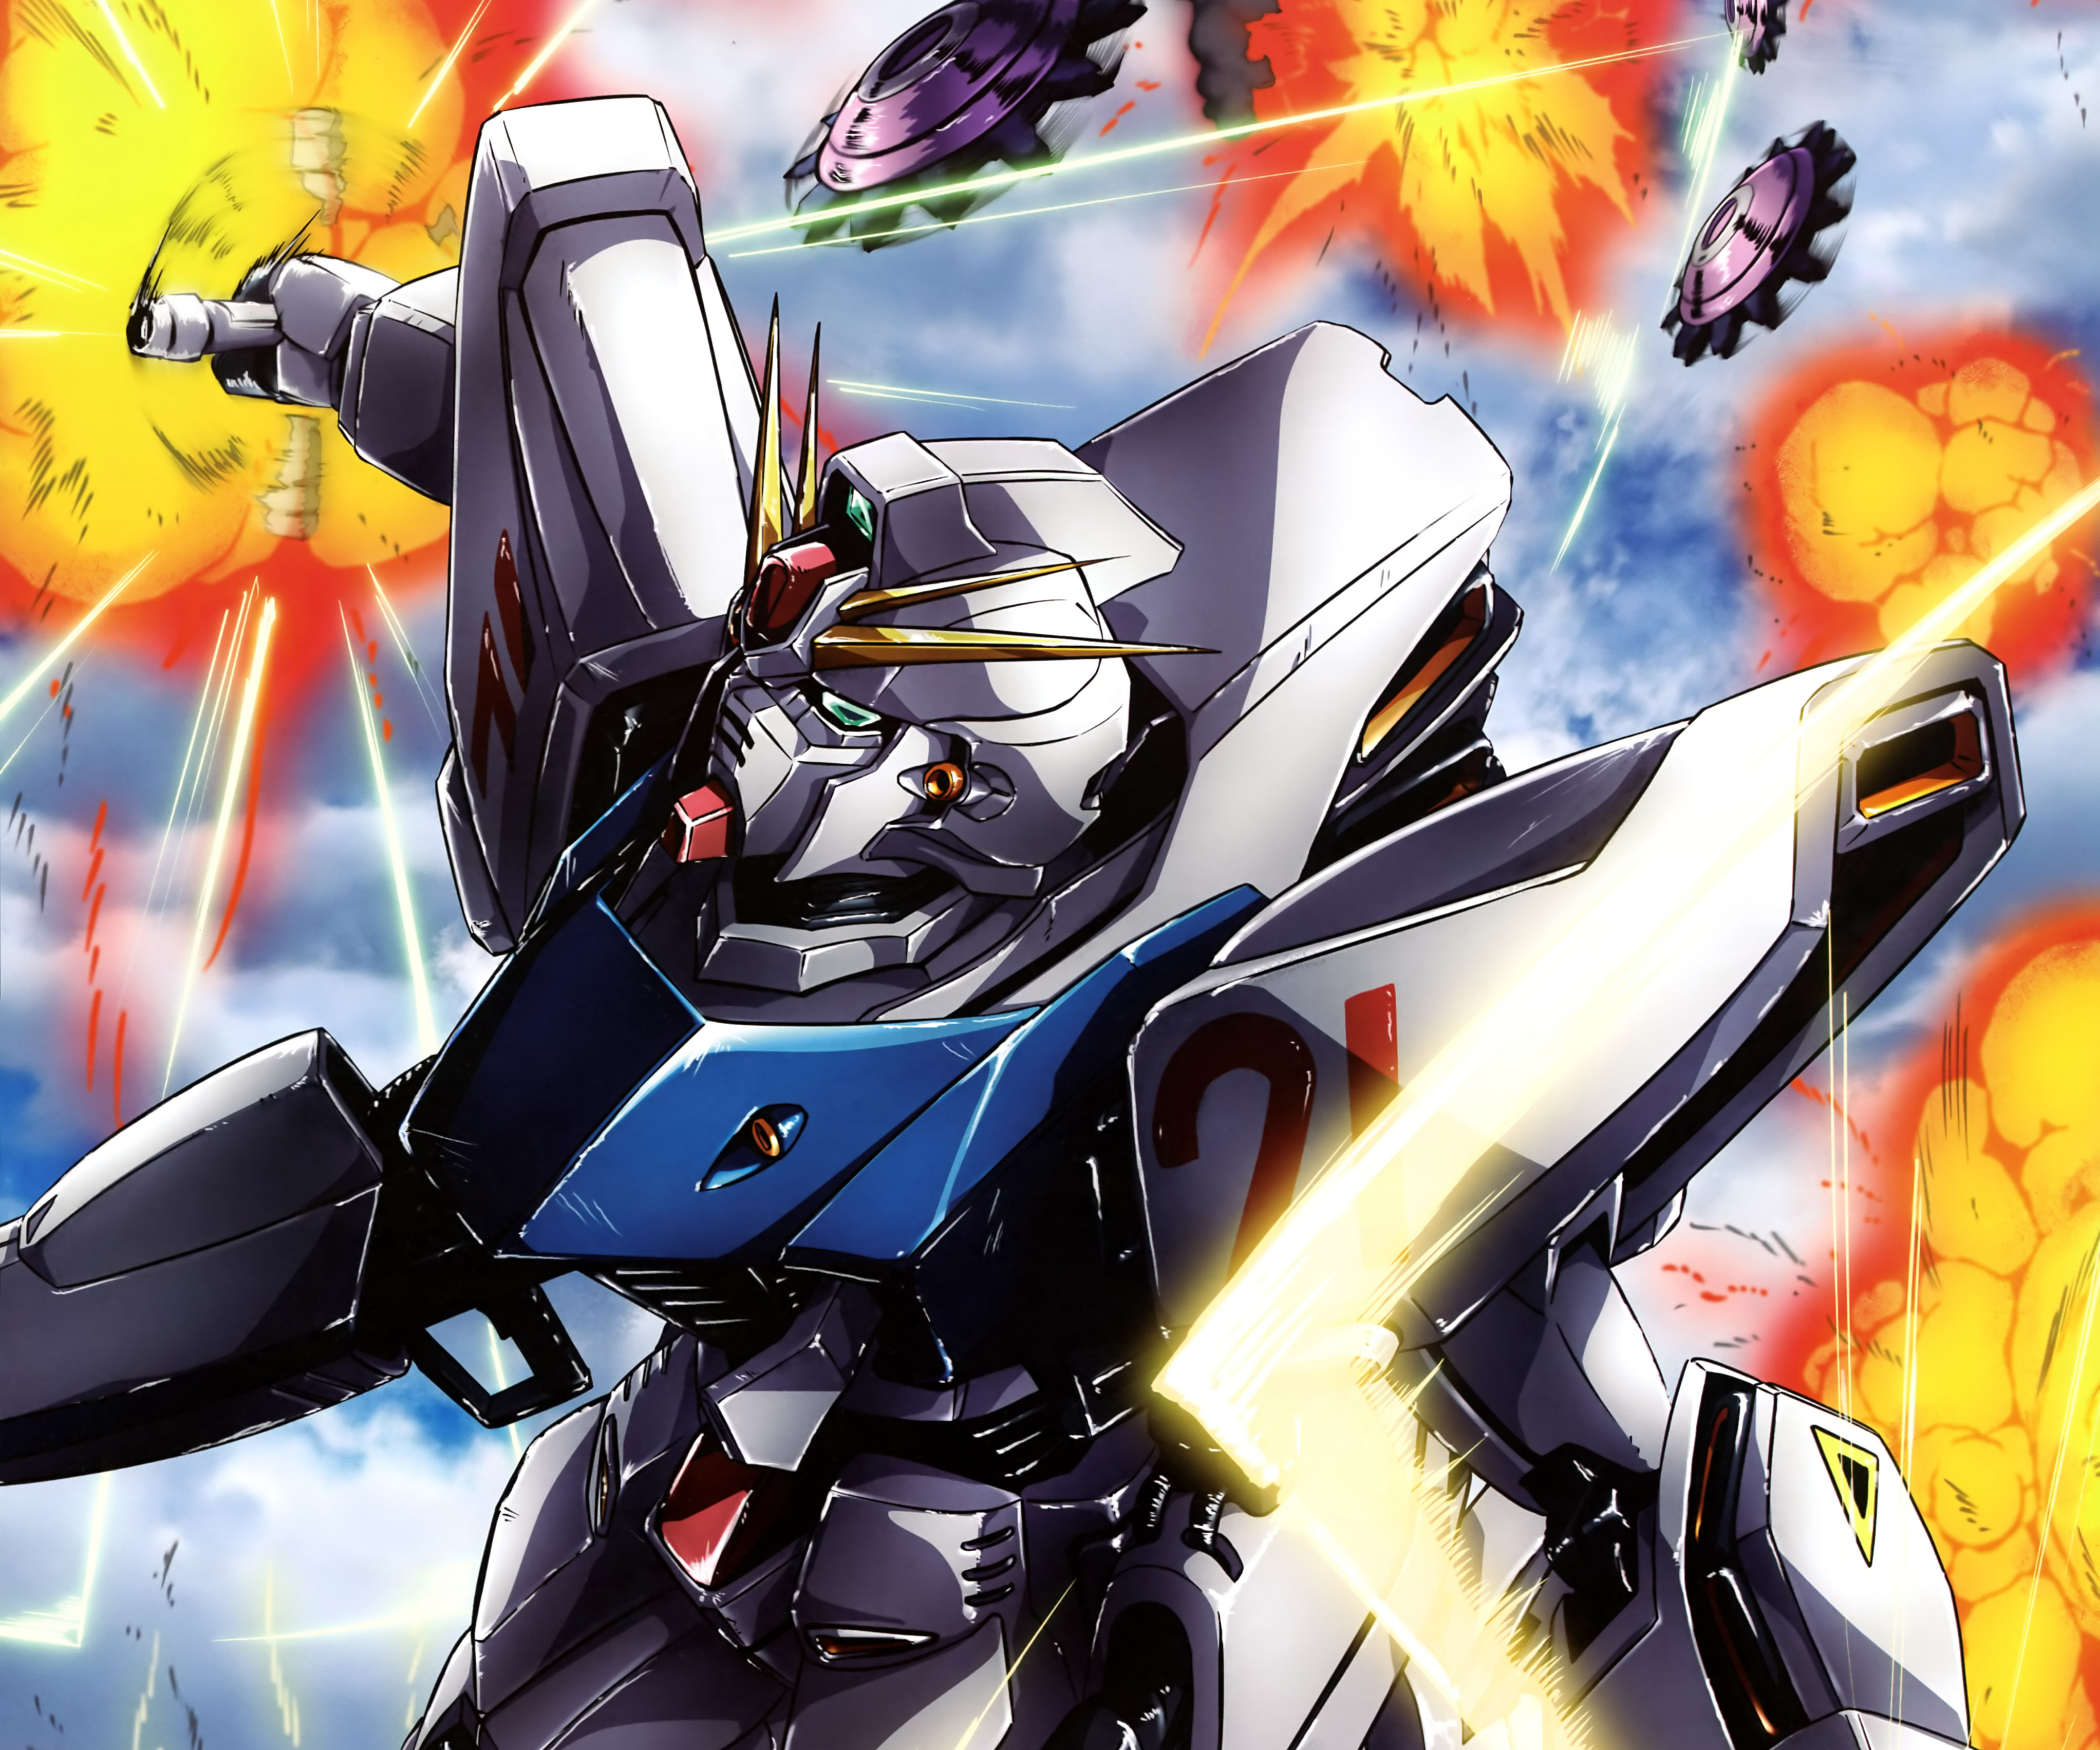 Anime Mobile Suit Gundam F91 4088x3407